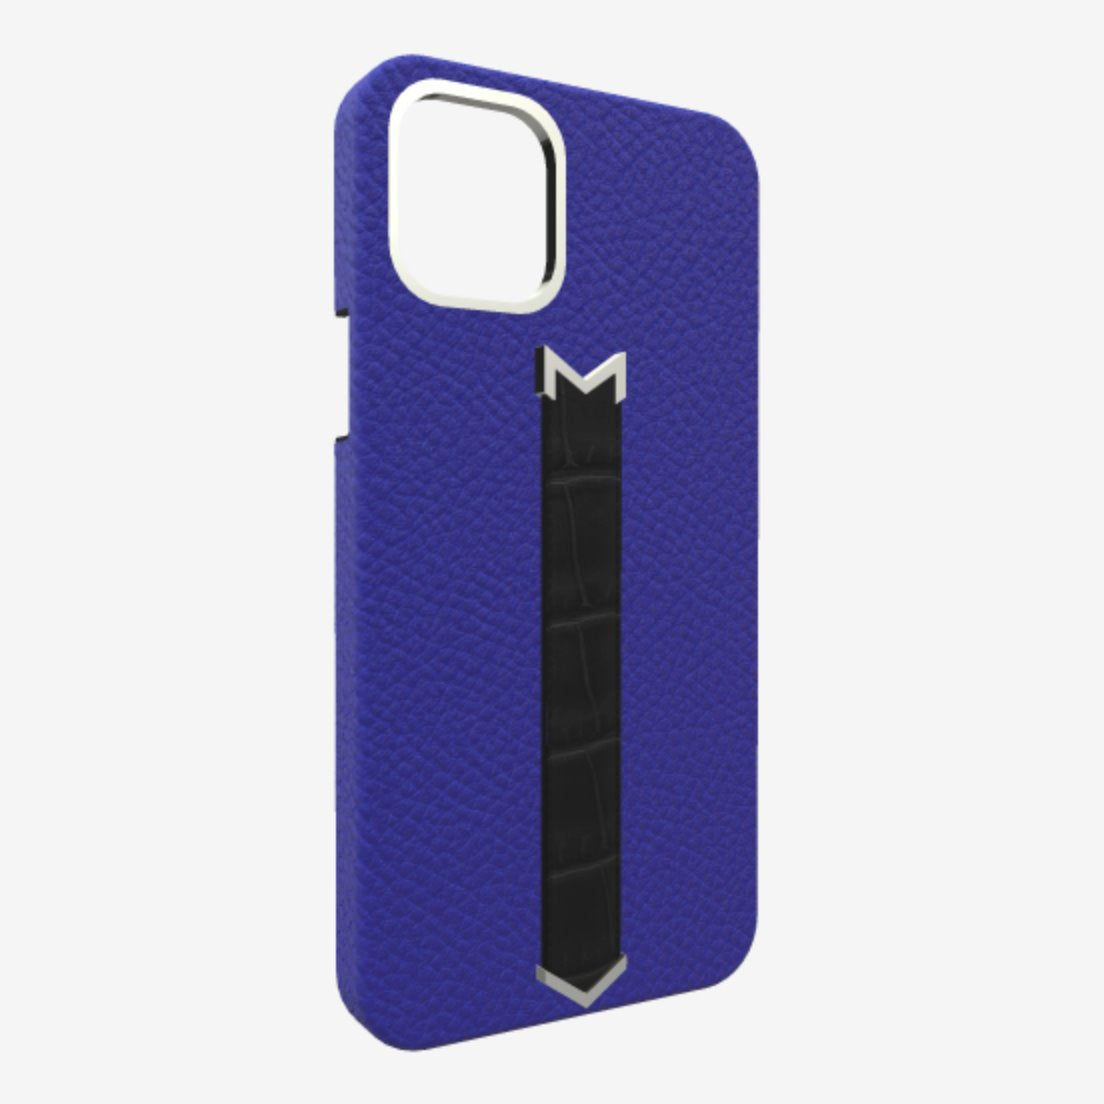 Silver Finger Strap Case for iPhone 13 Pro Max in Genuine Calfskin and Alligator Electric-Blue Bond-Black 